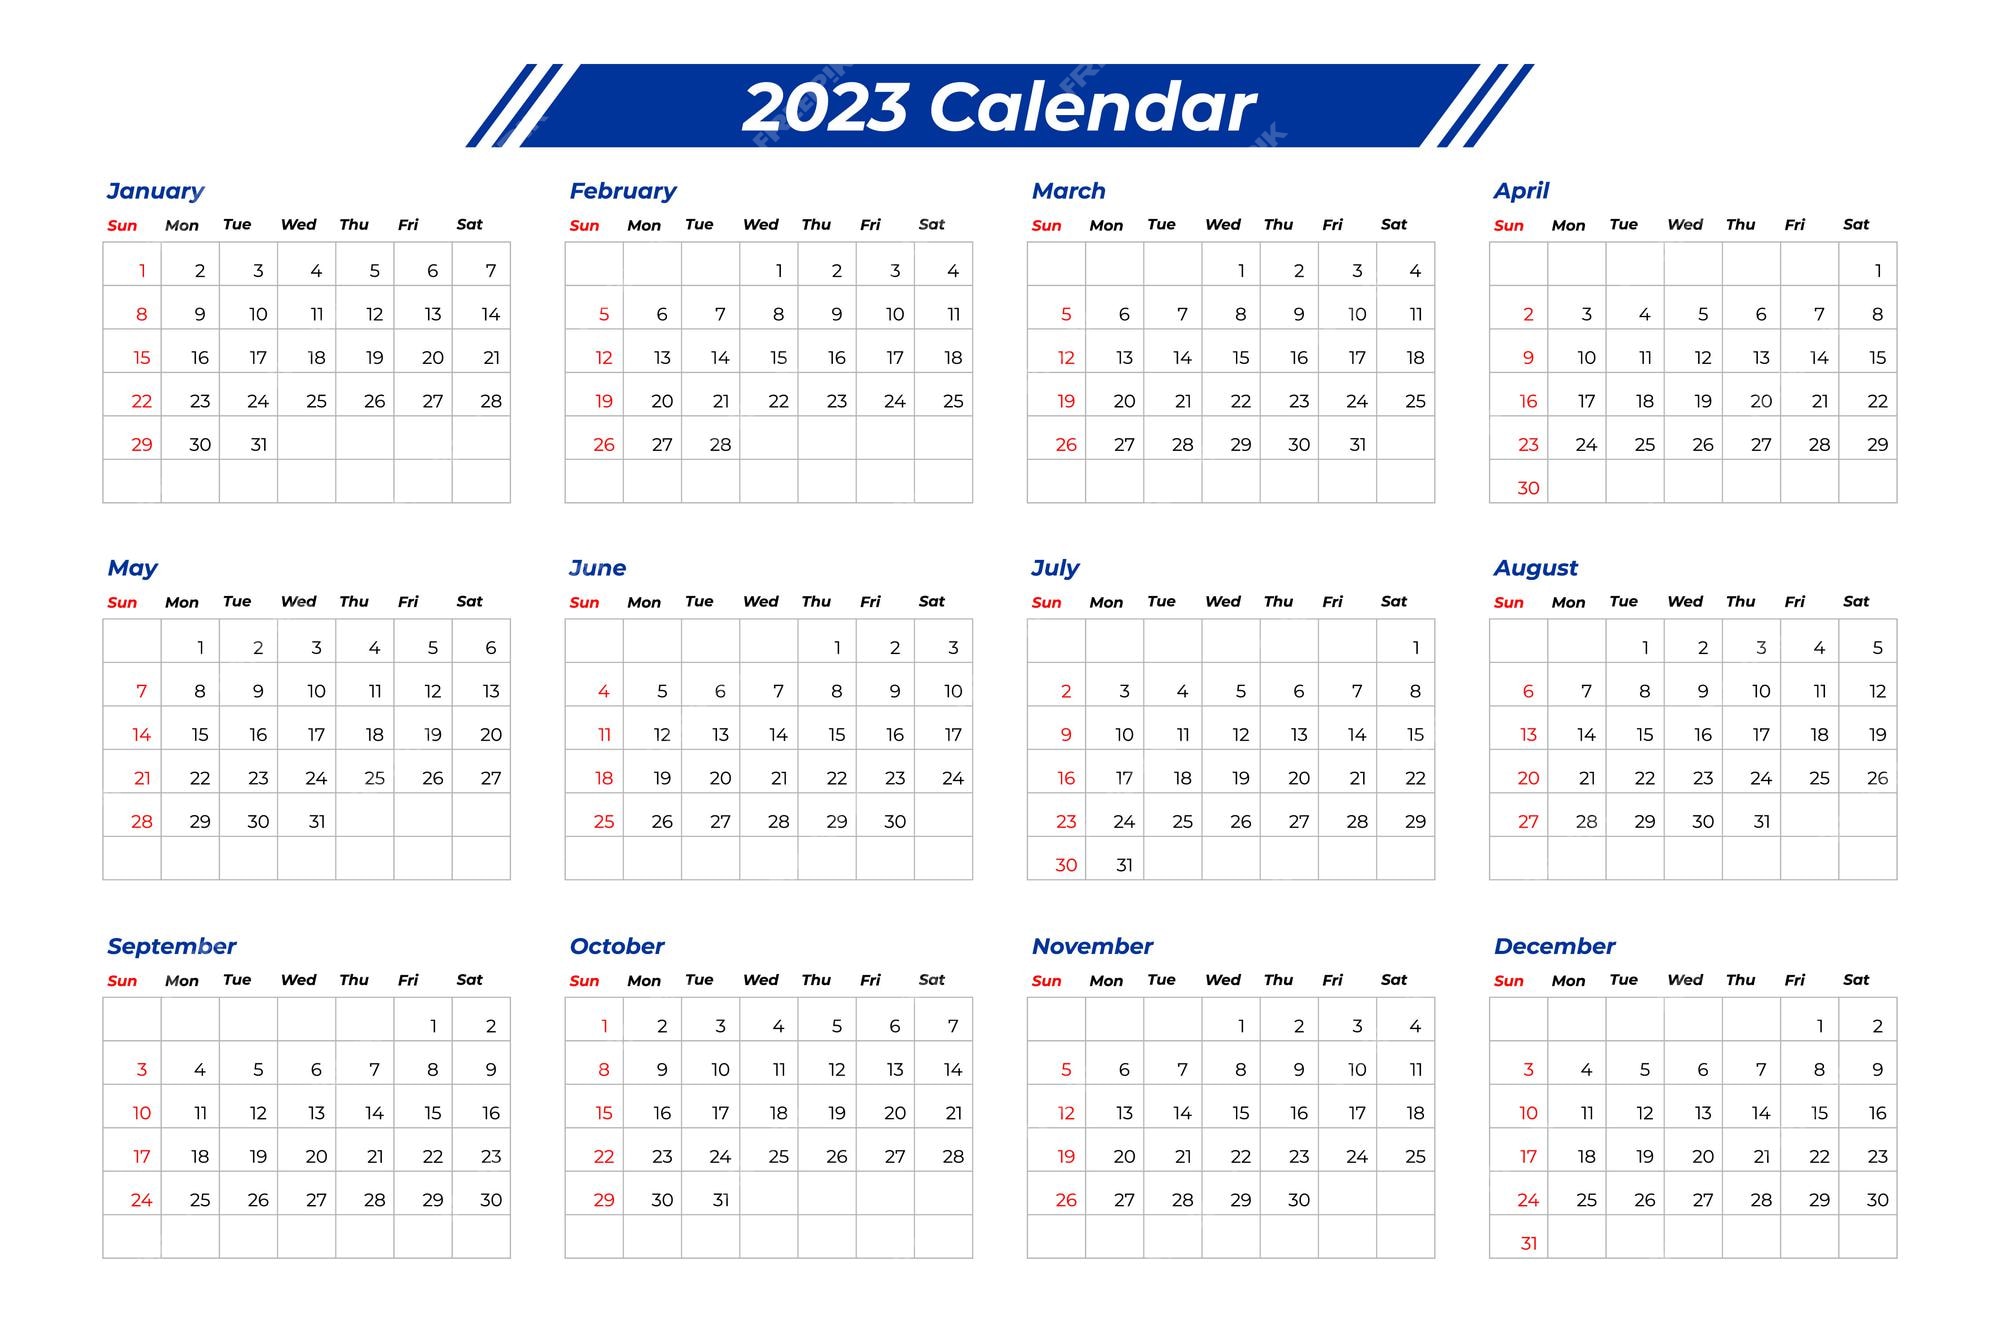 Календарь 2023 год рфпл. Календарная сетка 2023 вектор. Векторный календарь 2023. Сетка календаря на 2023 год.